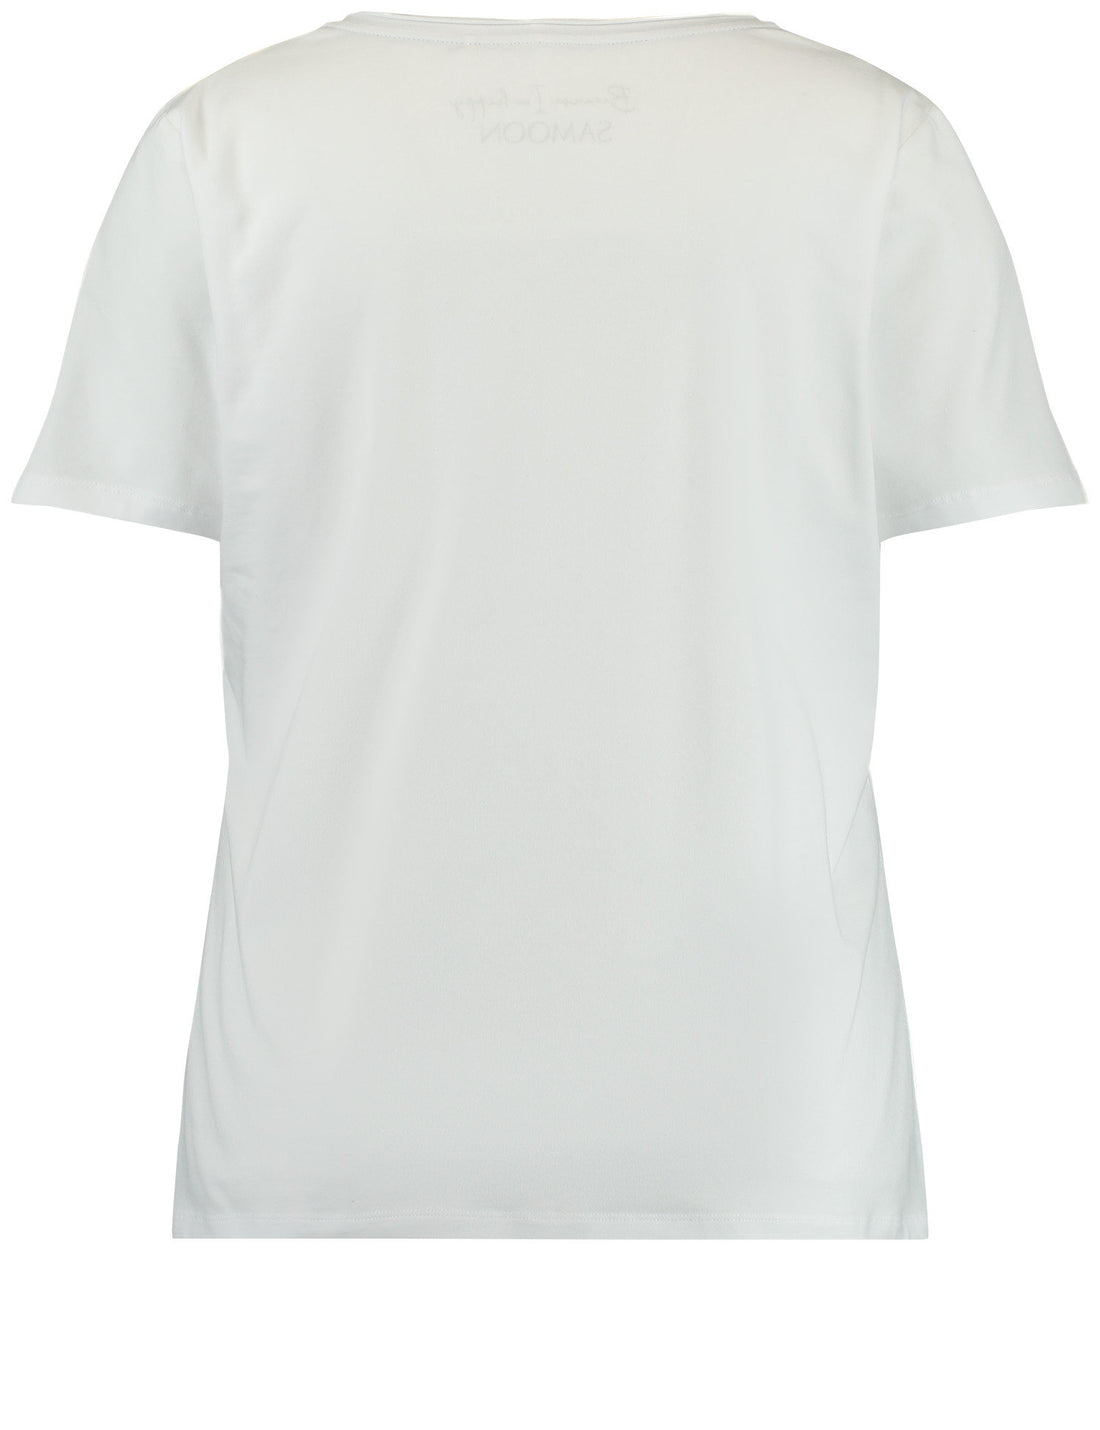 T-Shirt With Rhinestones_471045-26102_9602_02